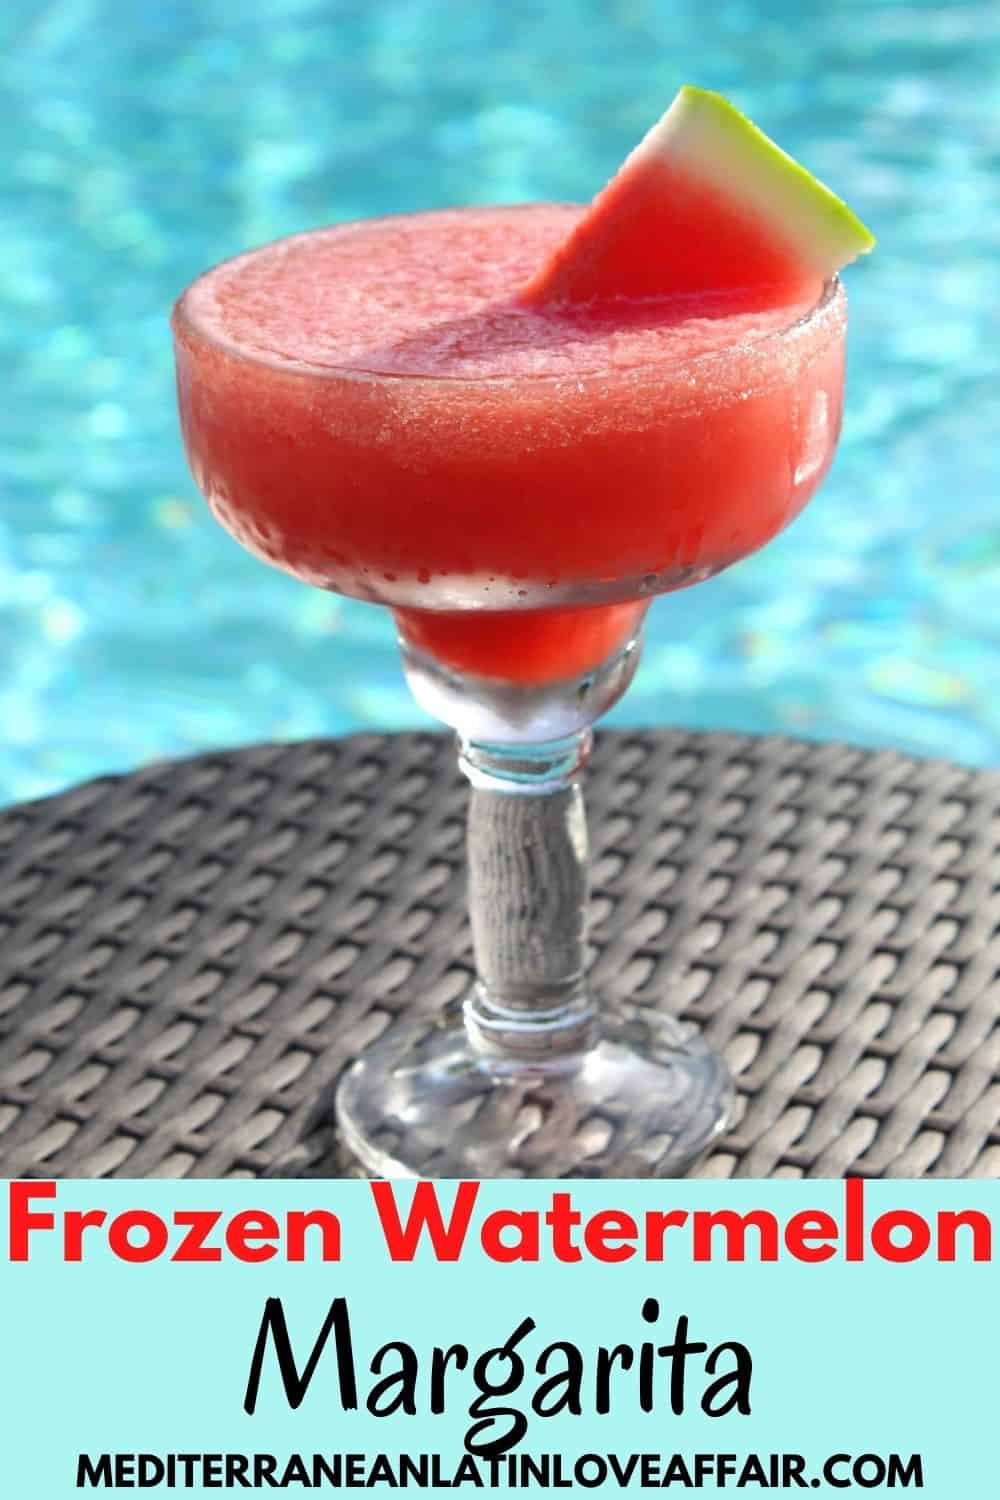 Poolside frozen watermelon margarita, garnished with a slice of watermelon. 